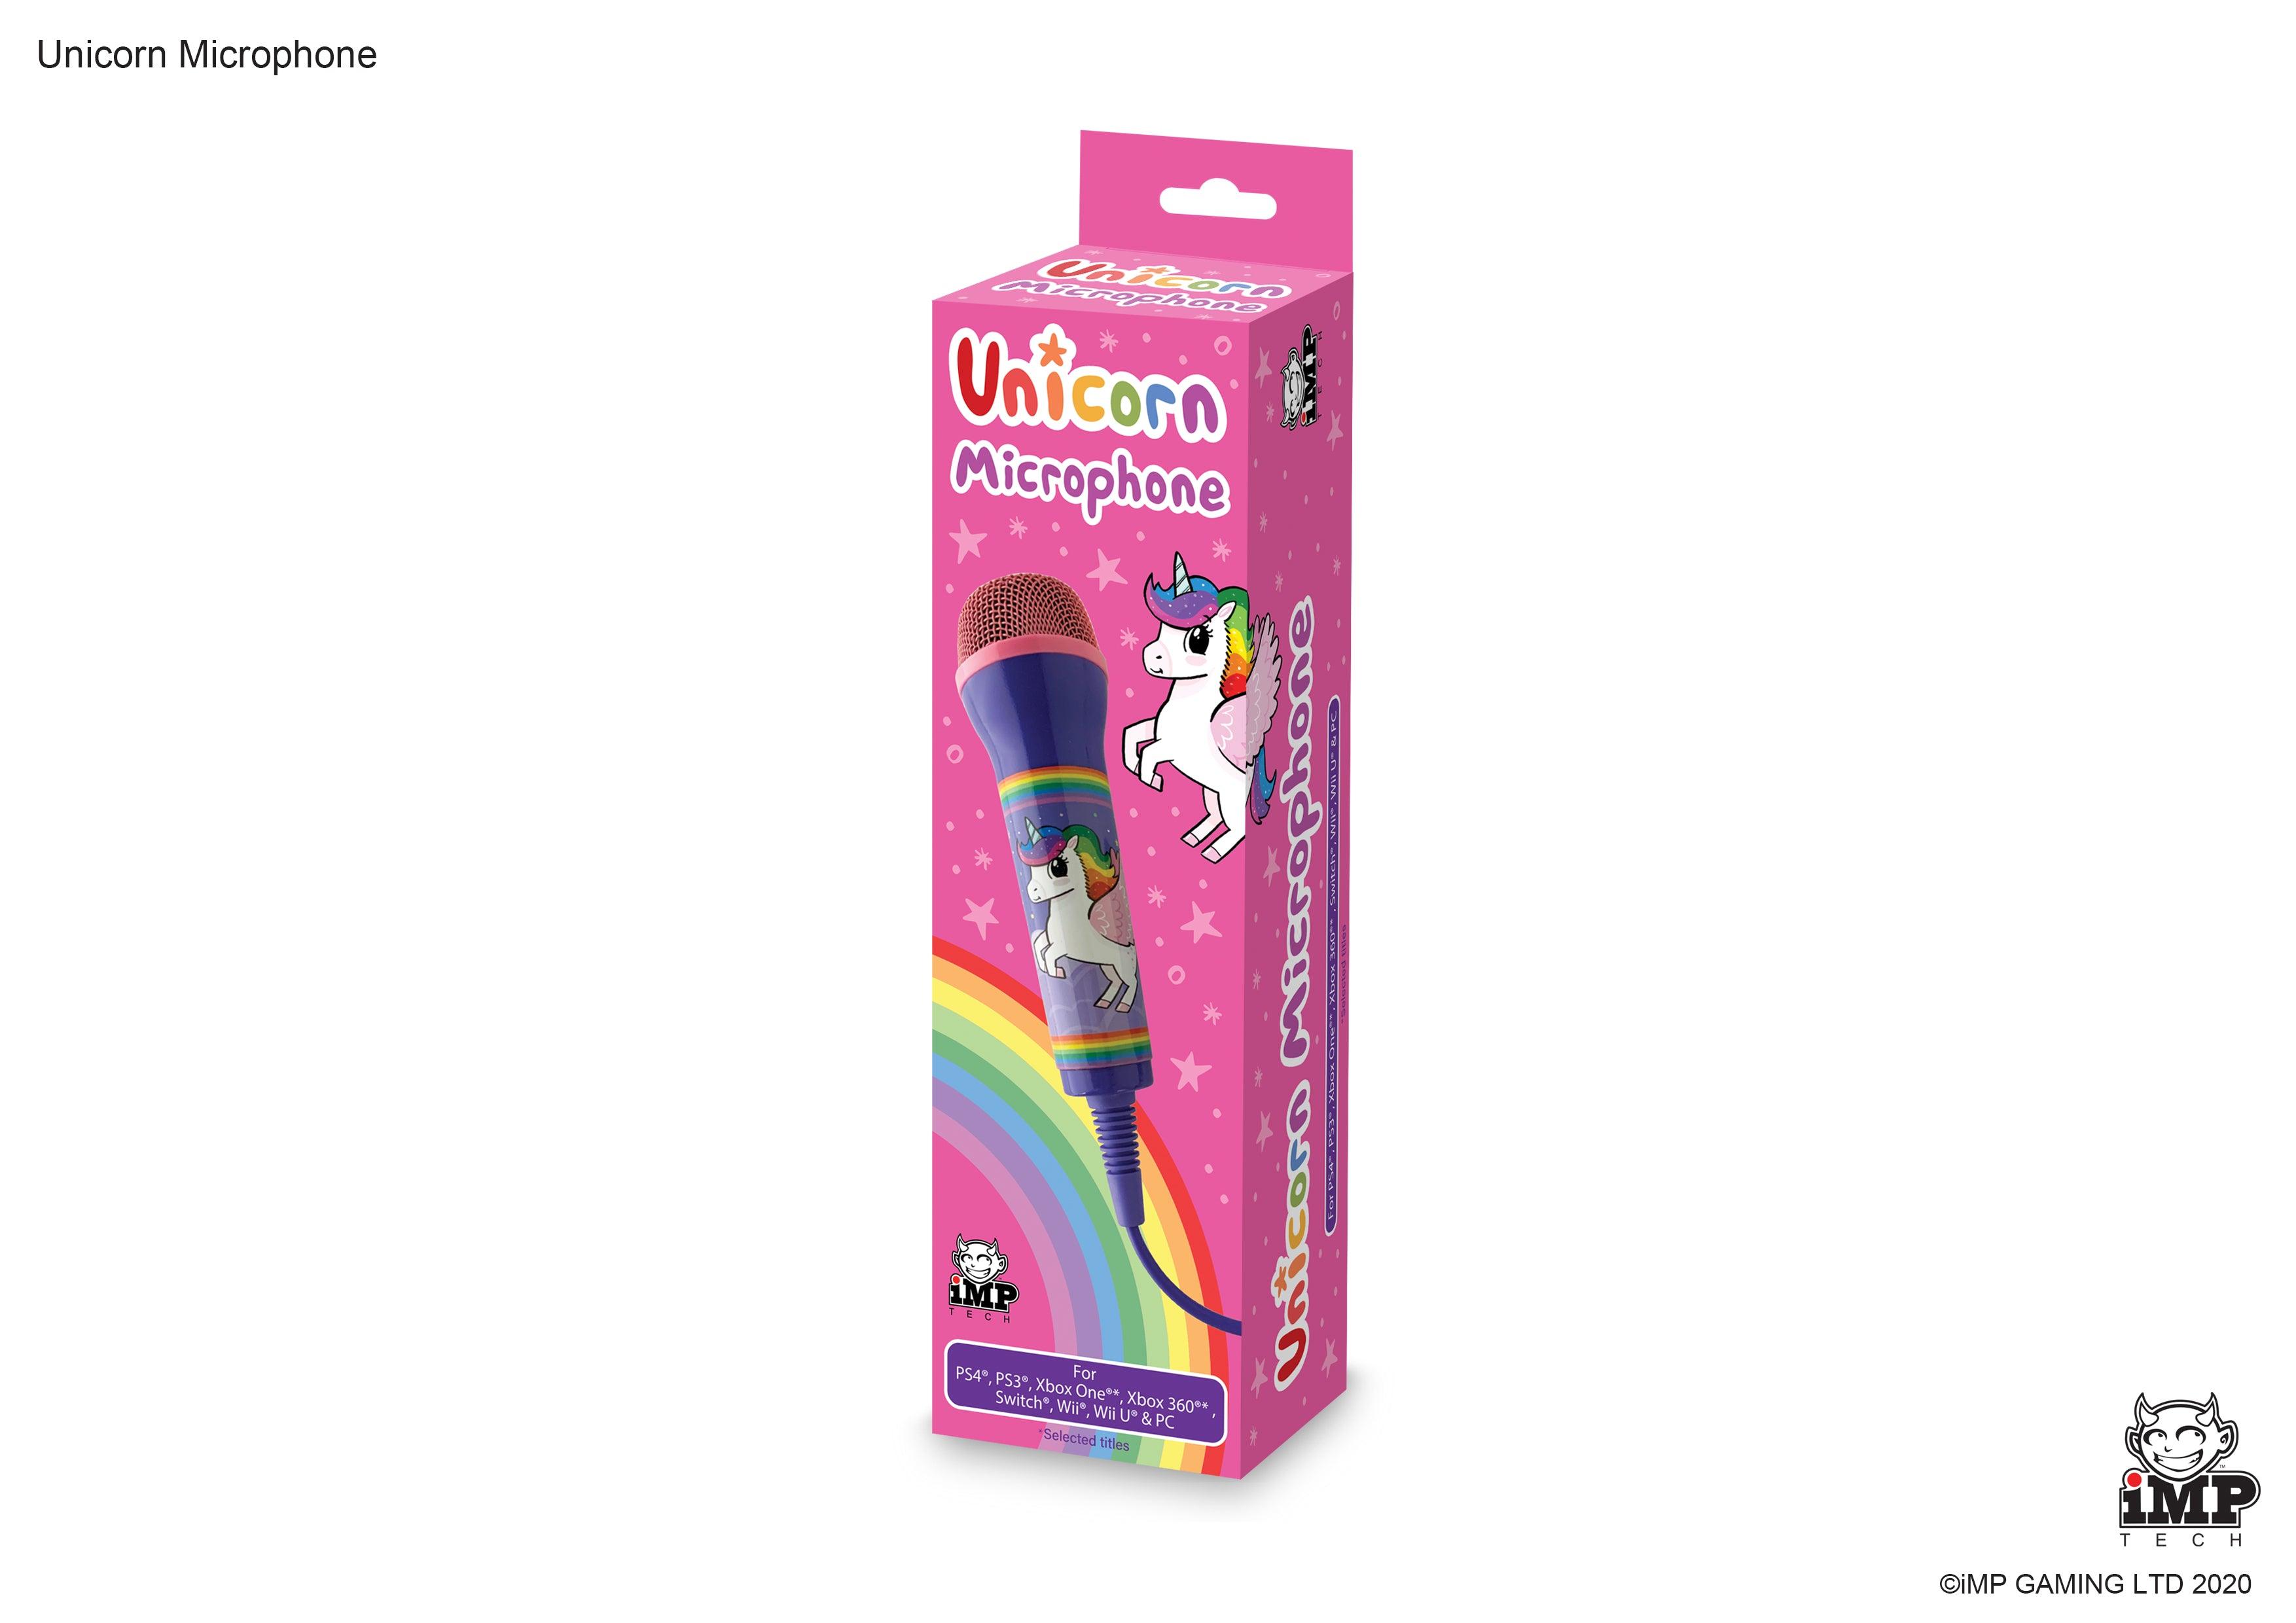 Unicorn Microphone 3M - Want a New Gadget